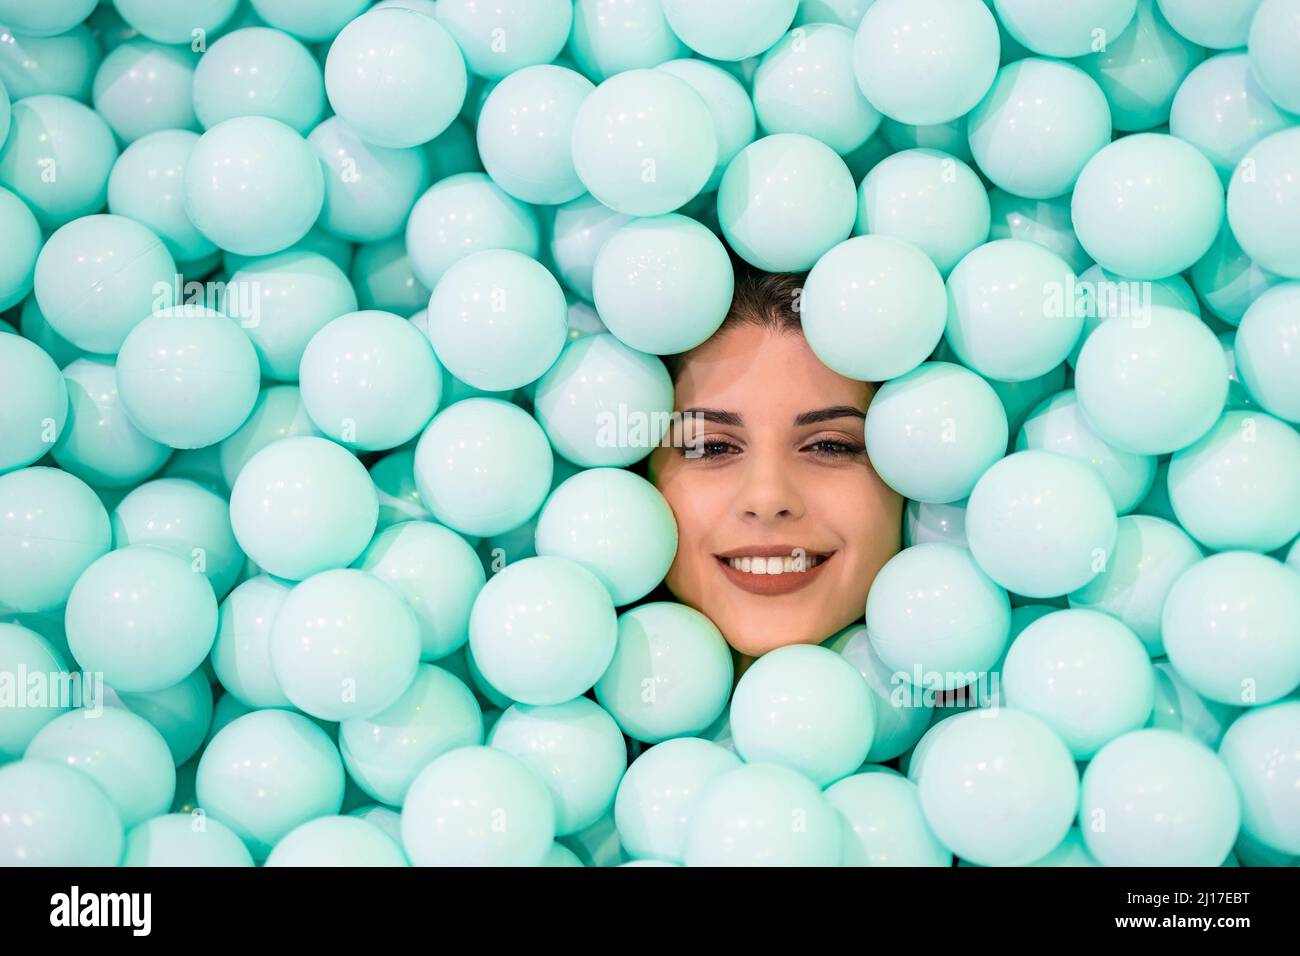 Smiling woman amidst blue balls Stock Photo - Alamy